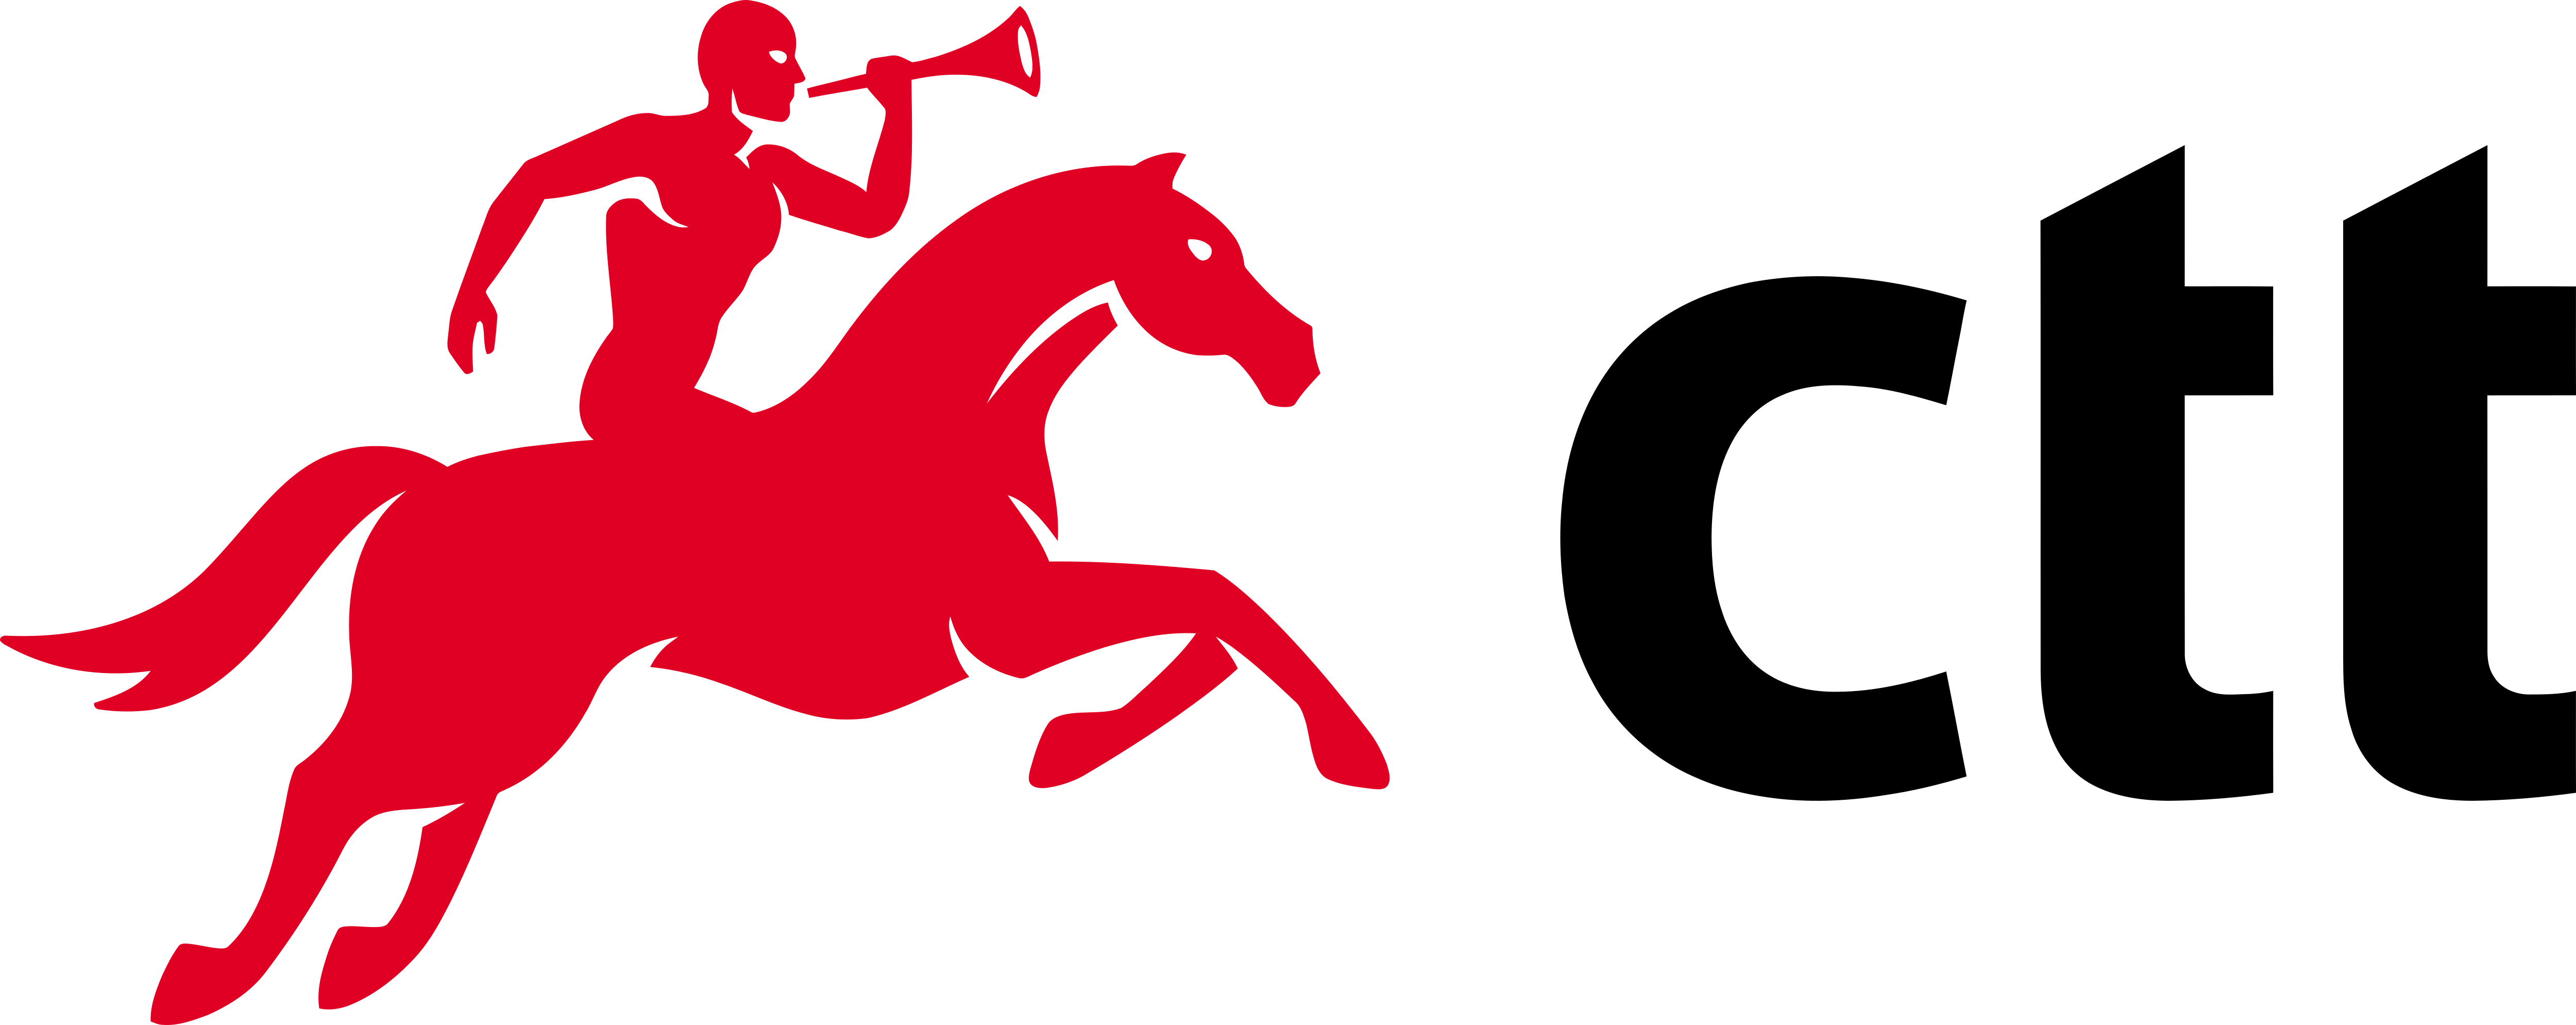 Бренд на коне. Логотип лошадь. Бренд с красной лошадью. Логотип CTT. Красный конь логотип.